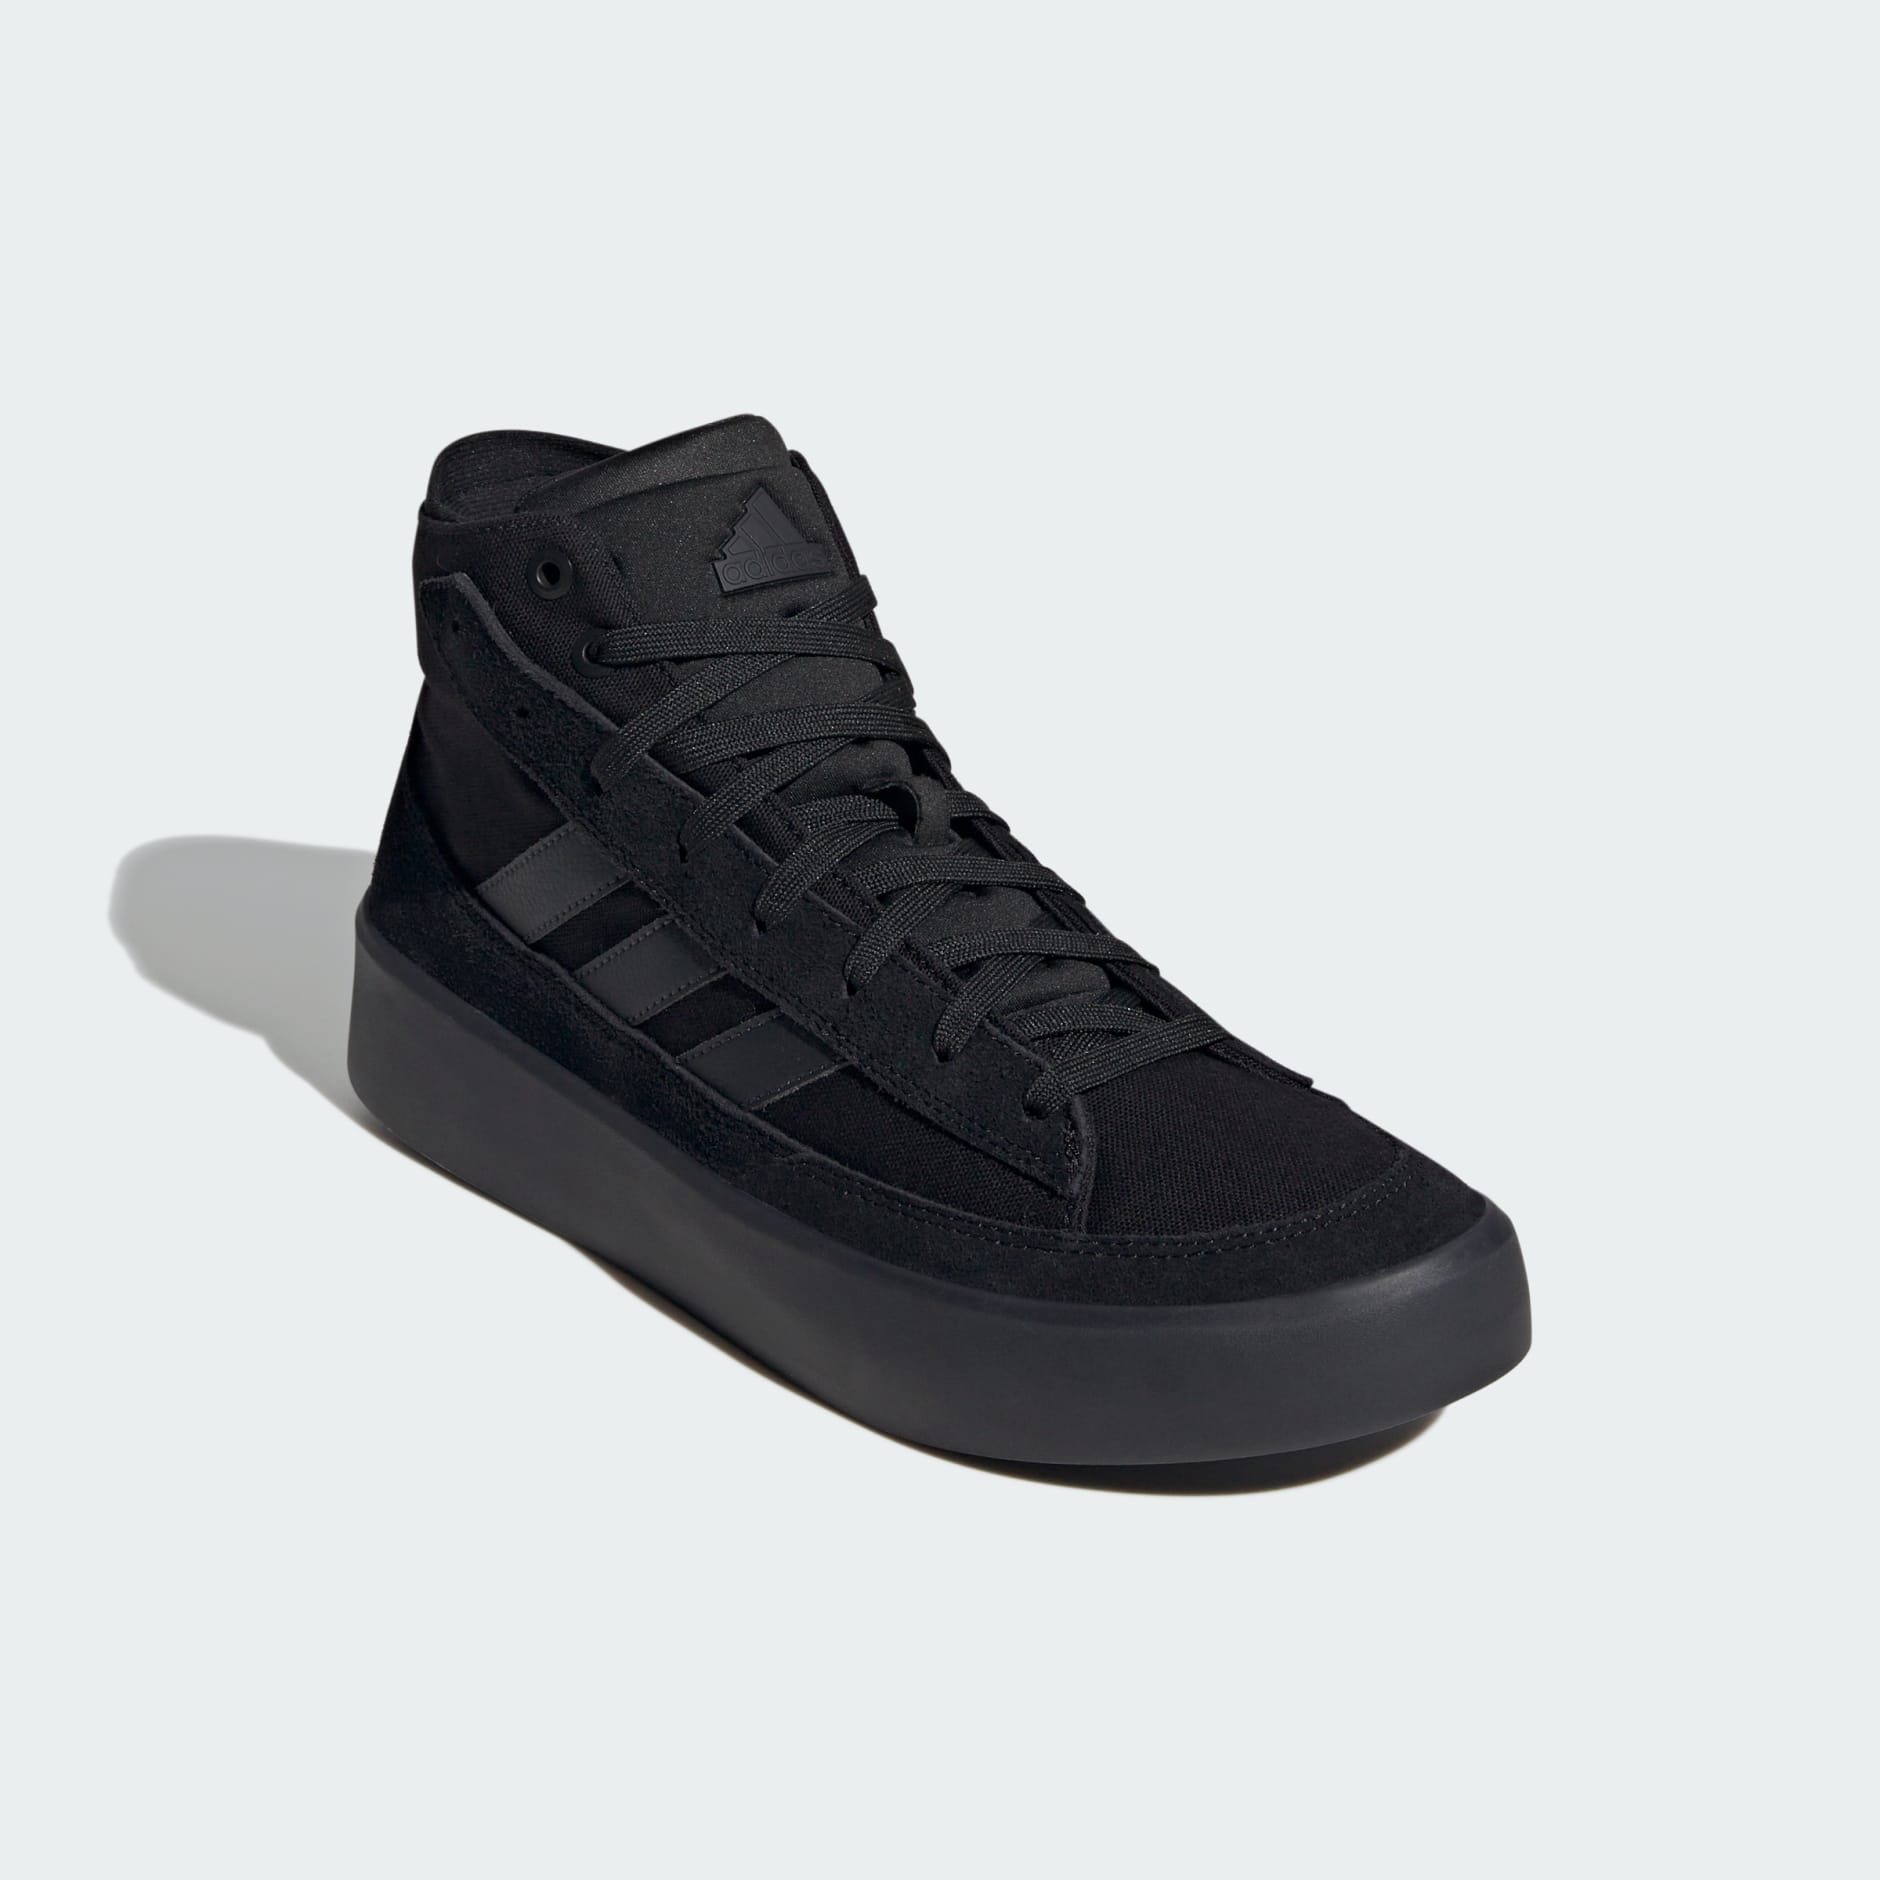 Shoes - Znsored High Shoes - Black | adidas Qatar